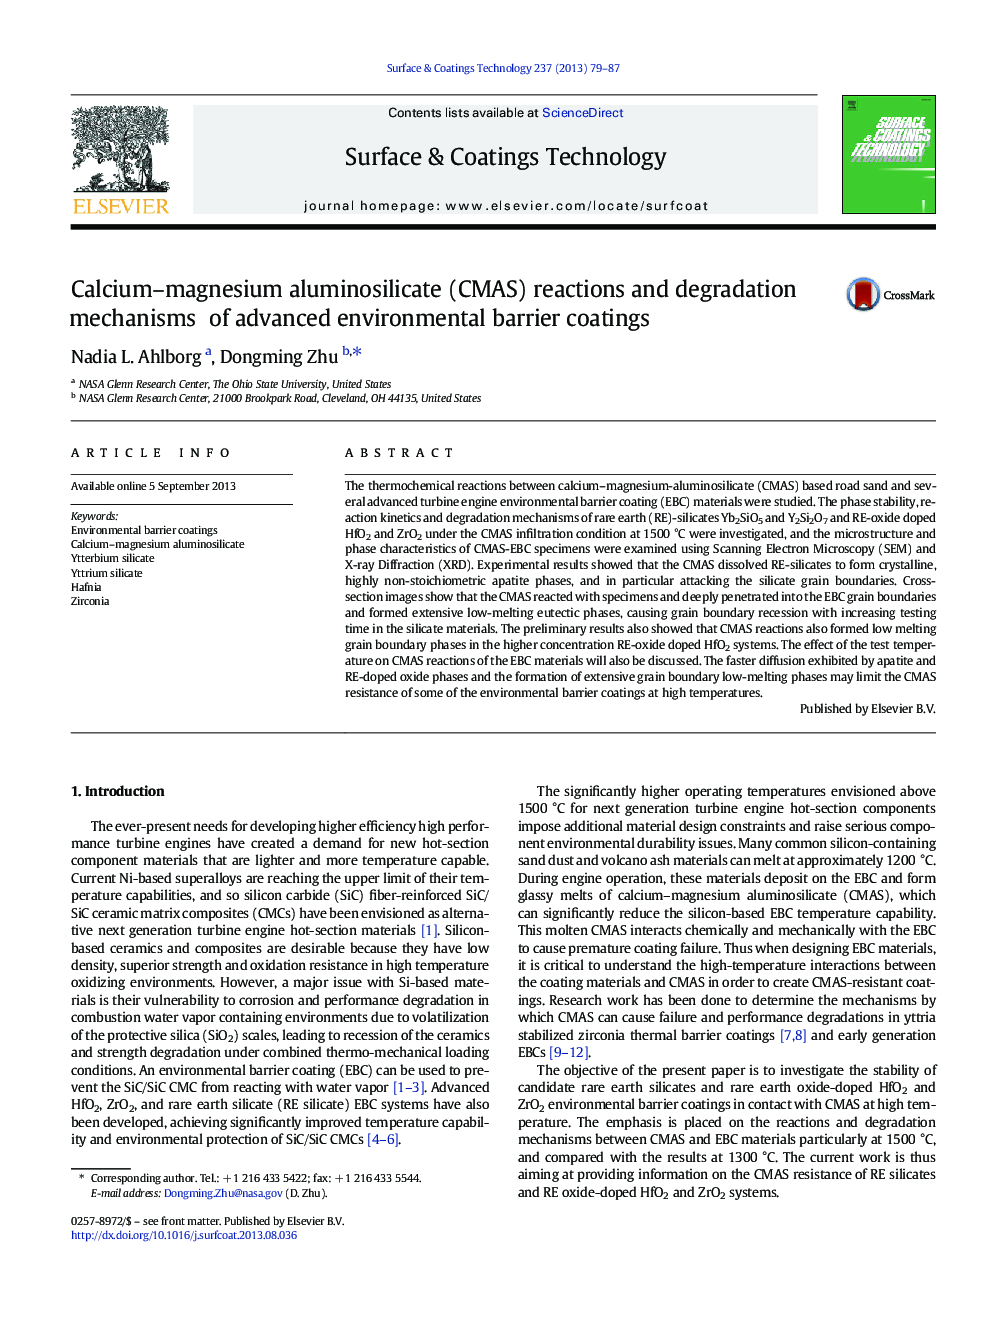 Calcium-magnesium aluminosilicate (CMAS) reactions and degradation mechanisms of advanced environmental barrier coatings